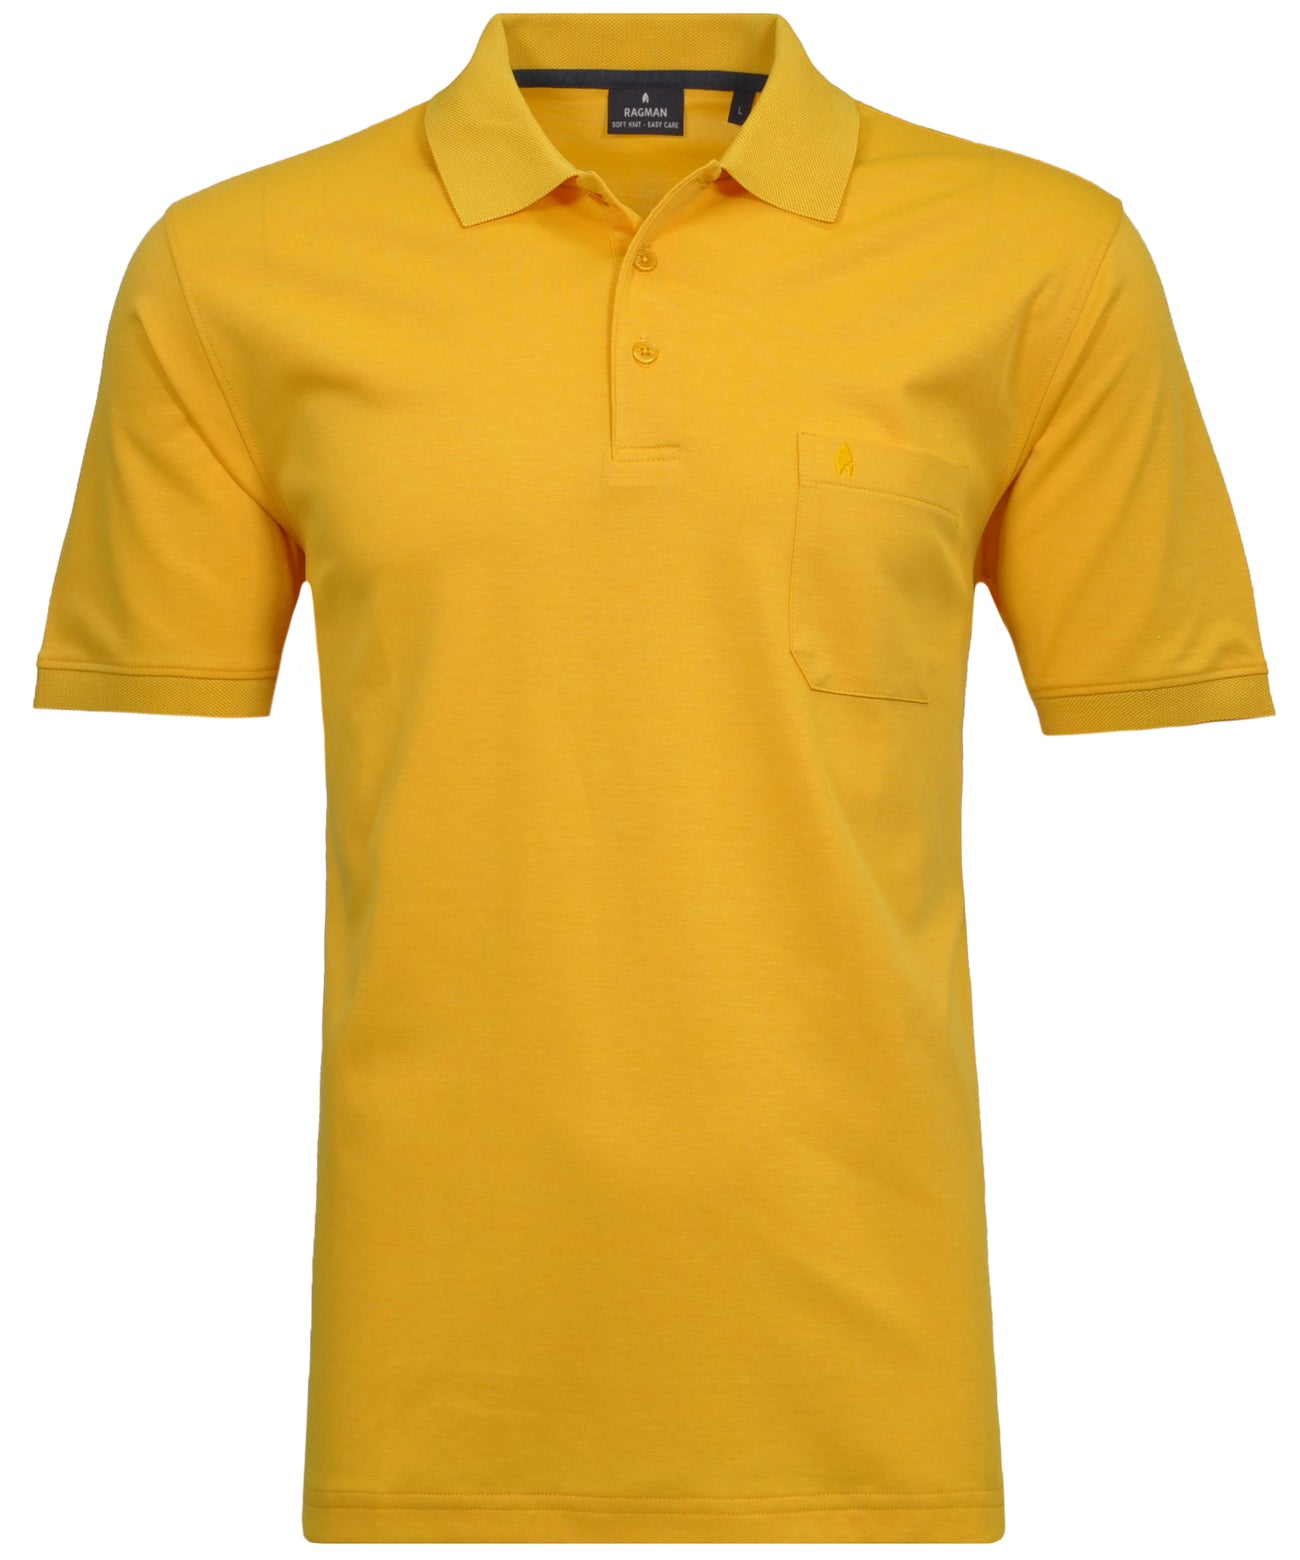 RAGMAN Kurzarm Softknit Poloshirt (Gelb)